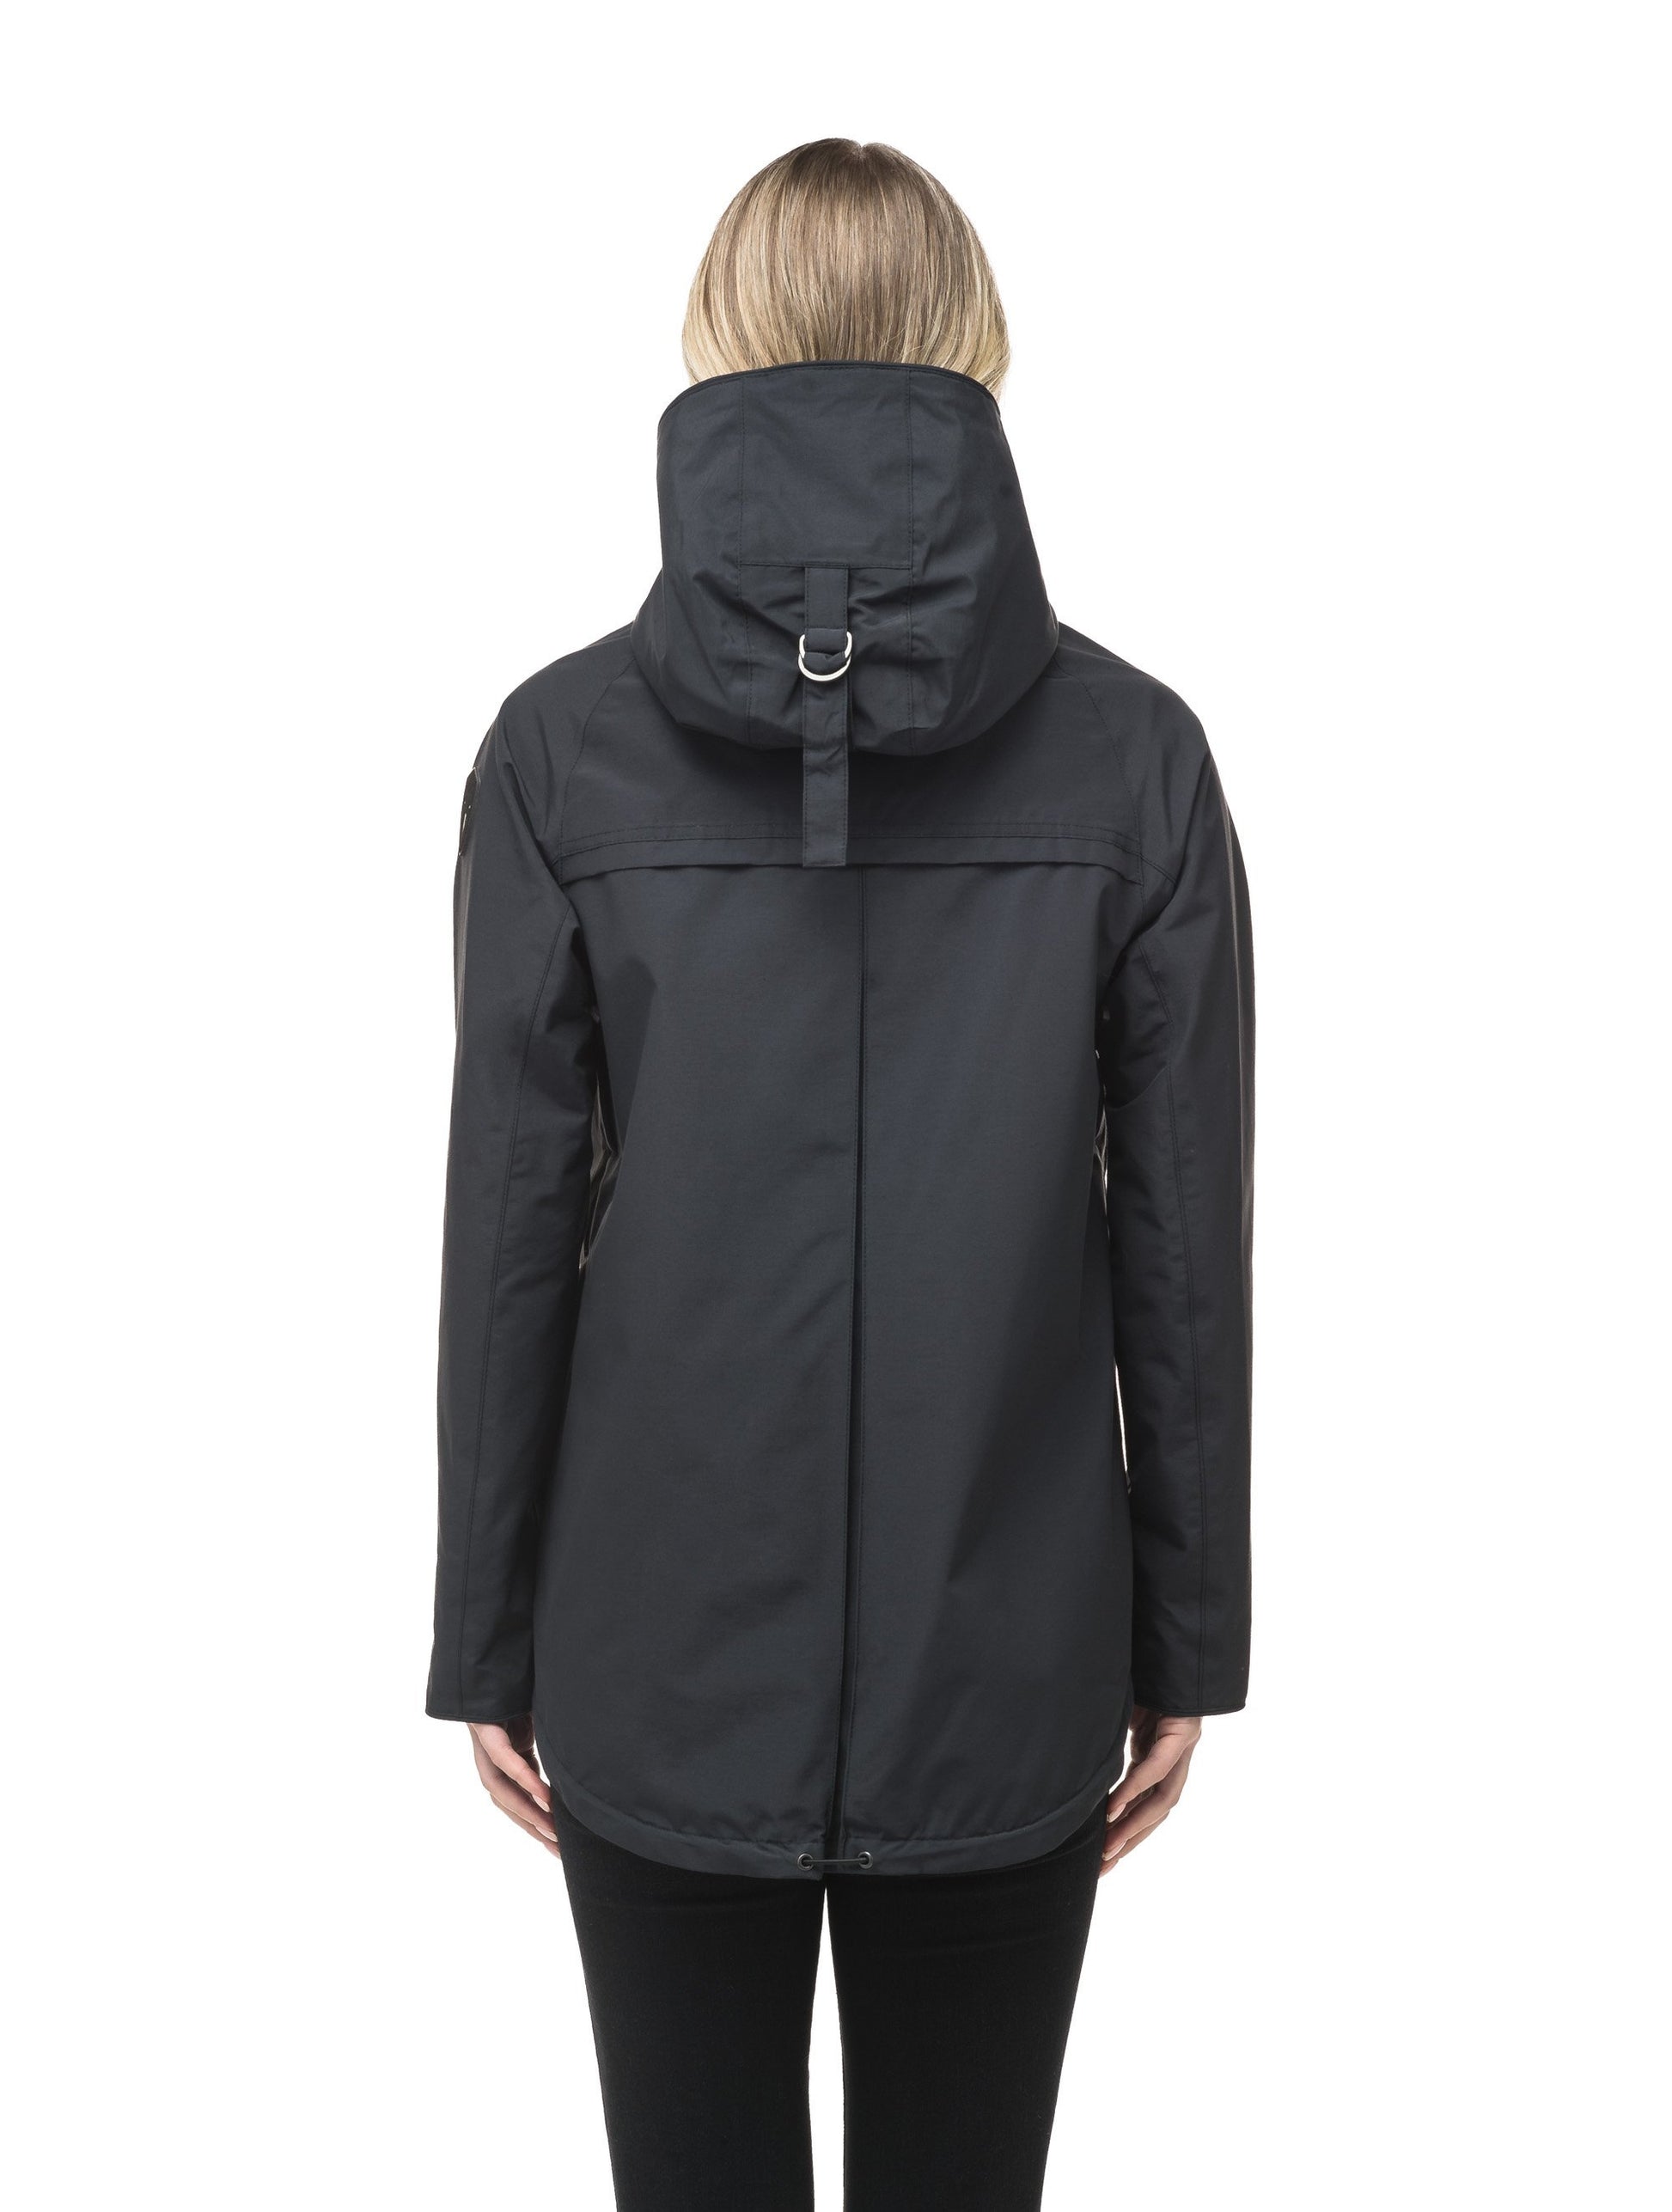 Women's hooded rain jacket with high low hem in Black